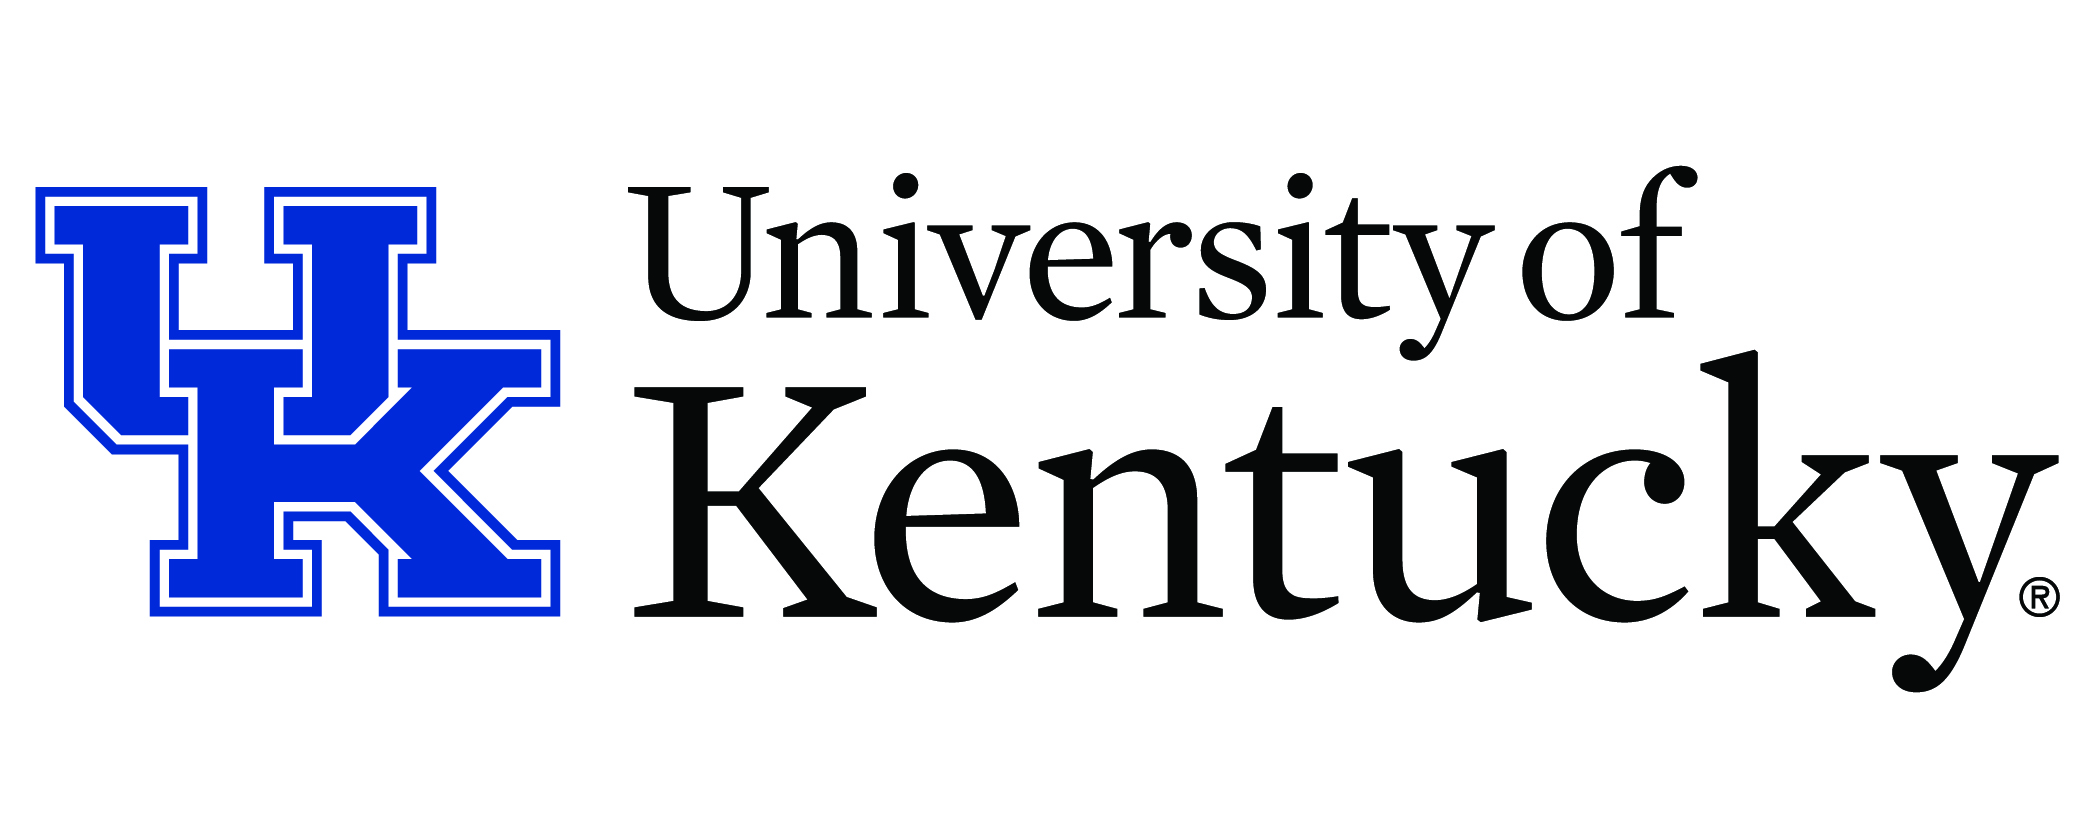 University of Kentucky - Official Seal or Logo